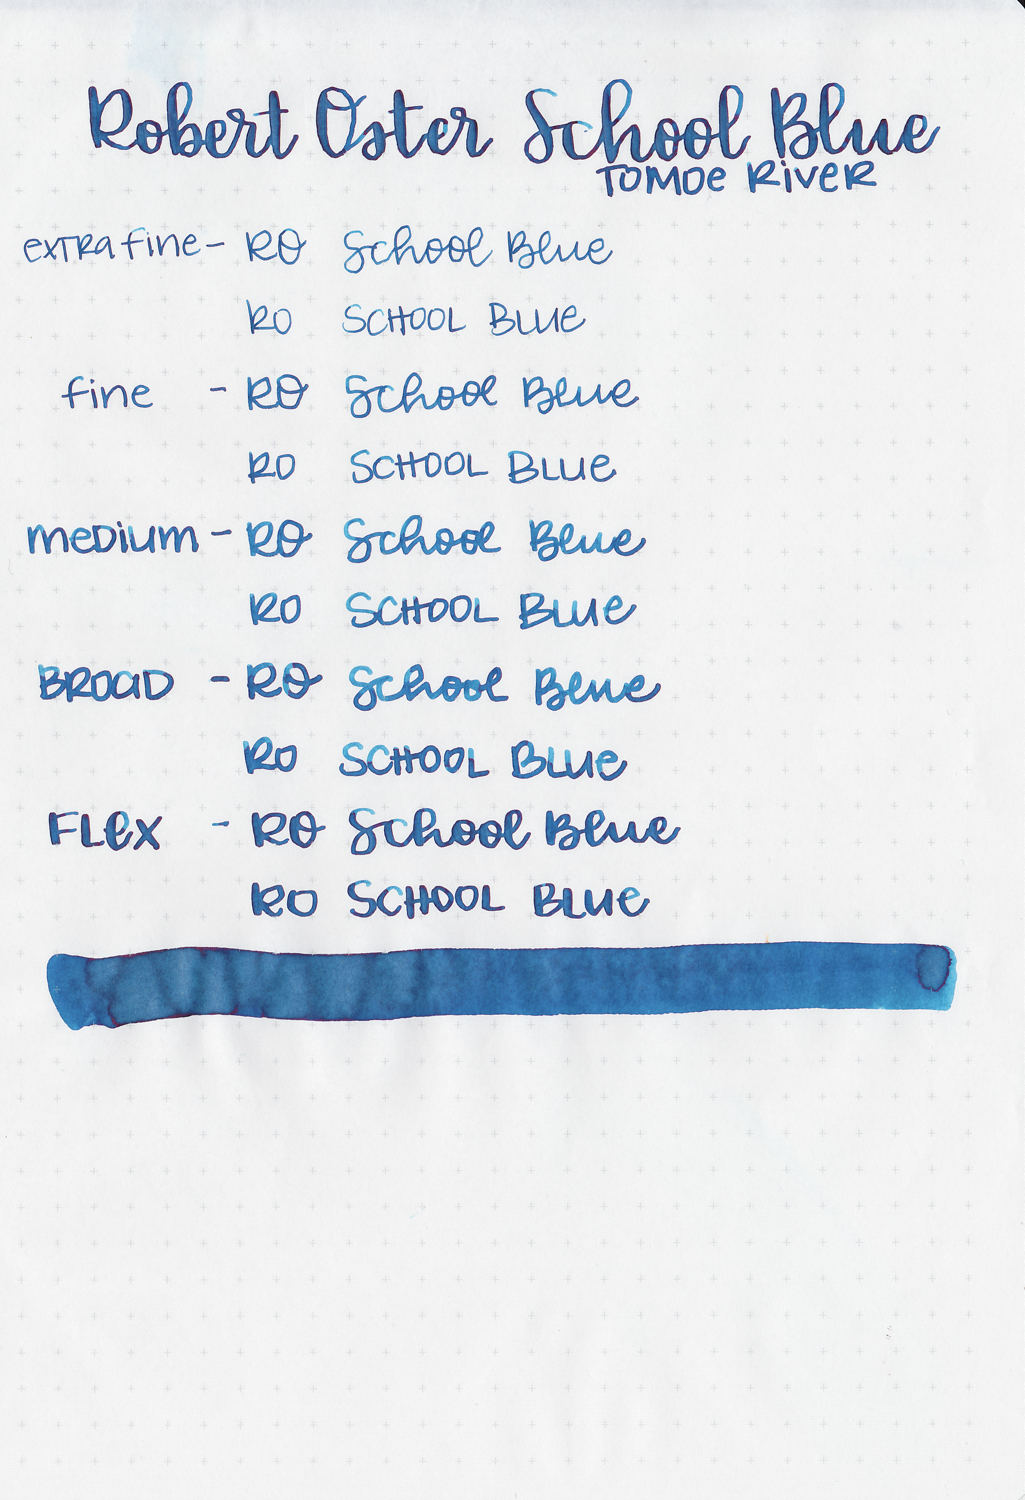 ro-school-blue-7.jpg